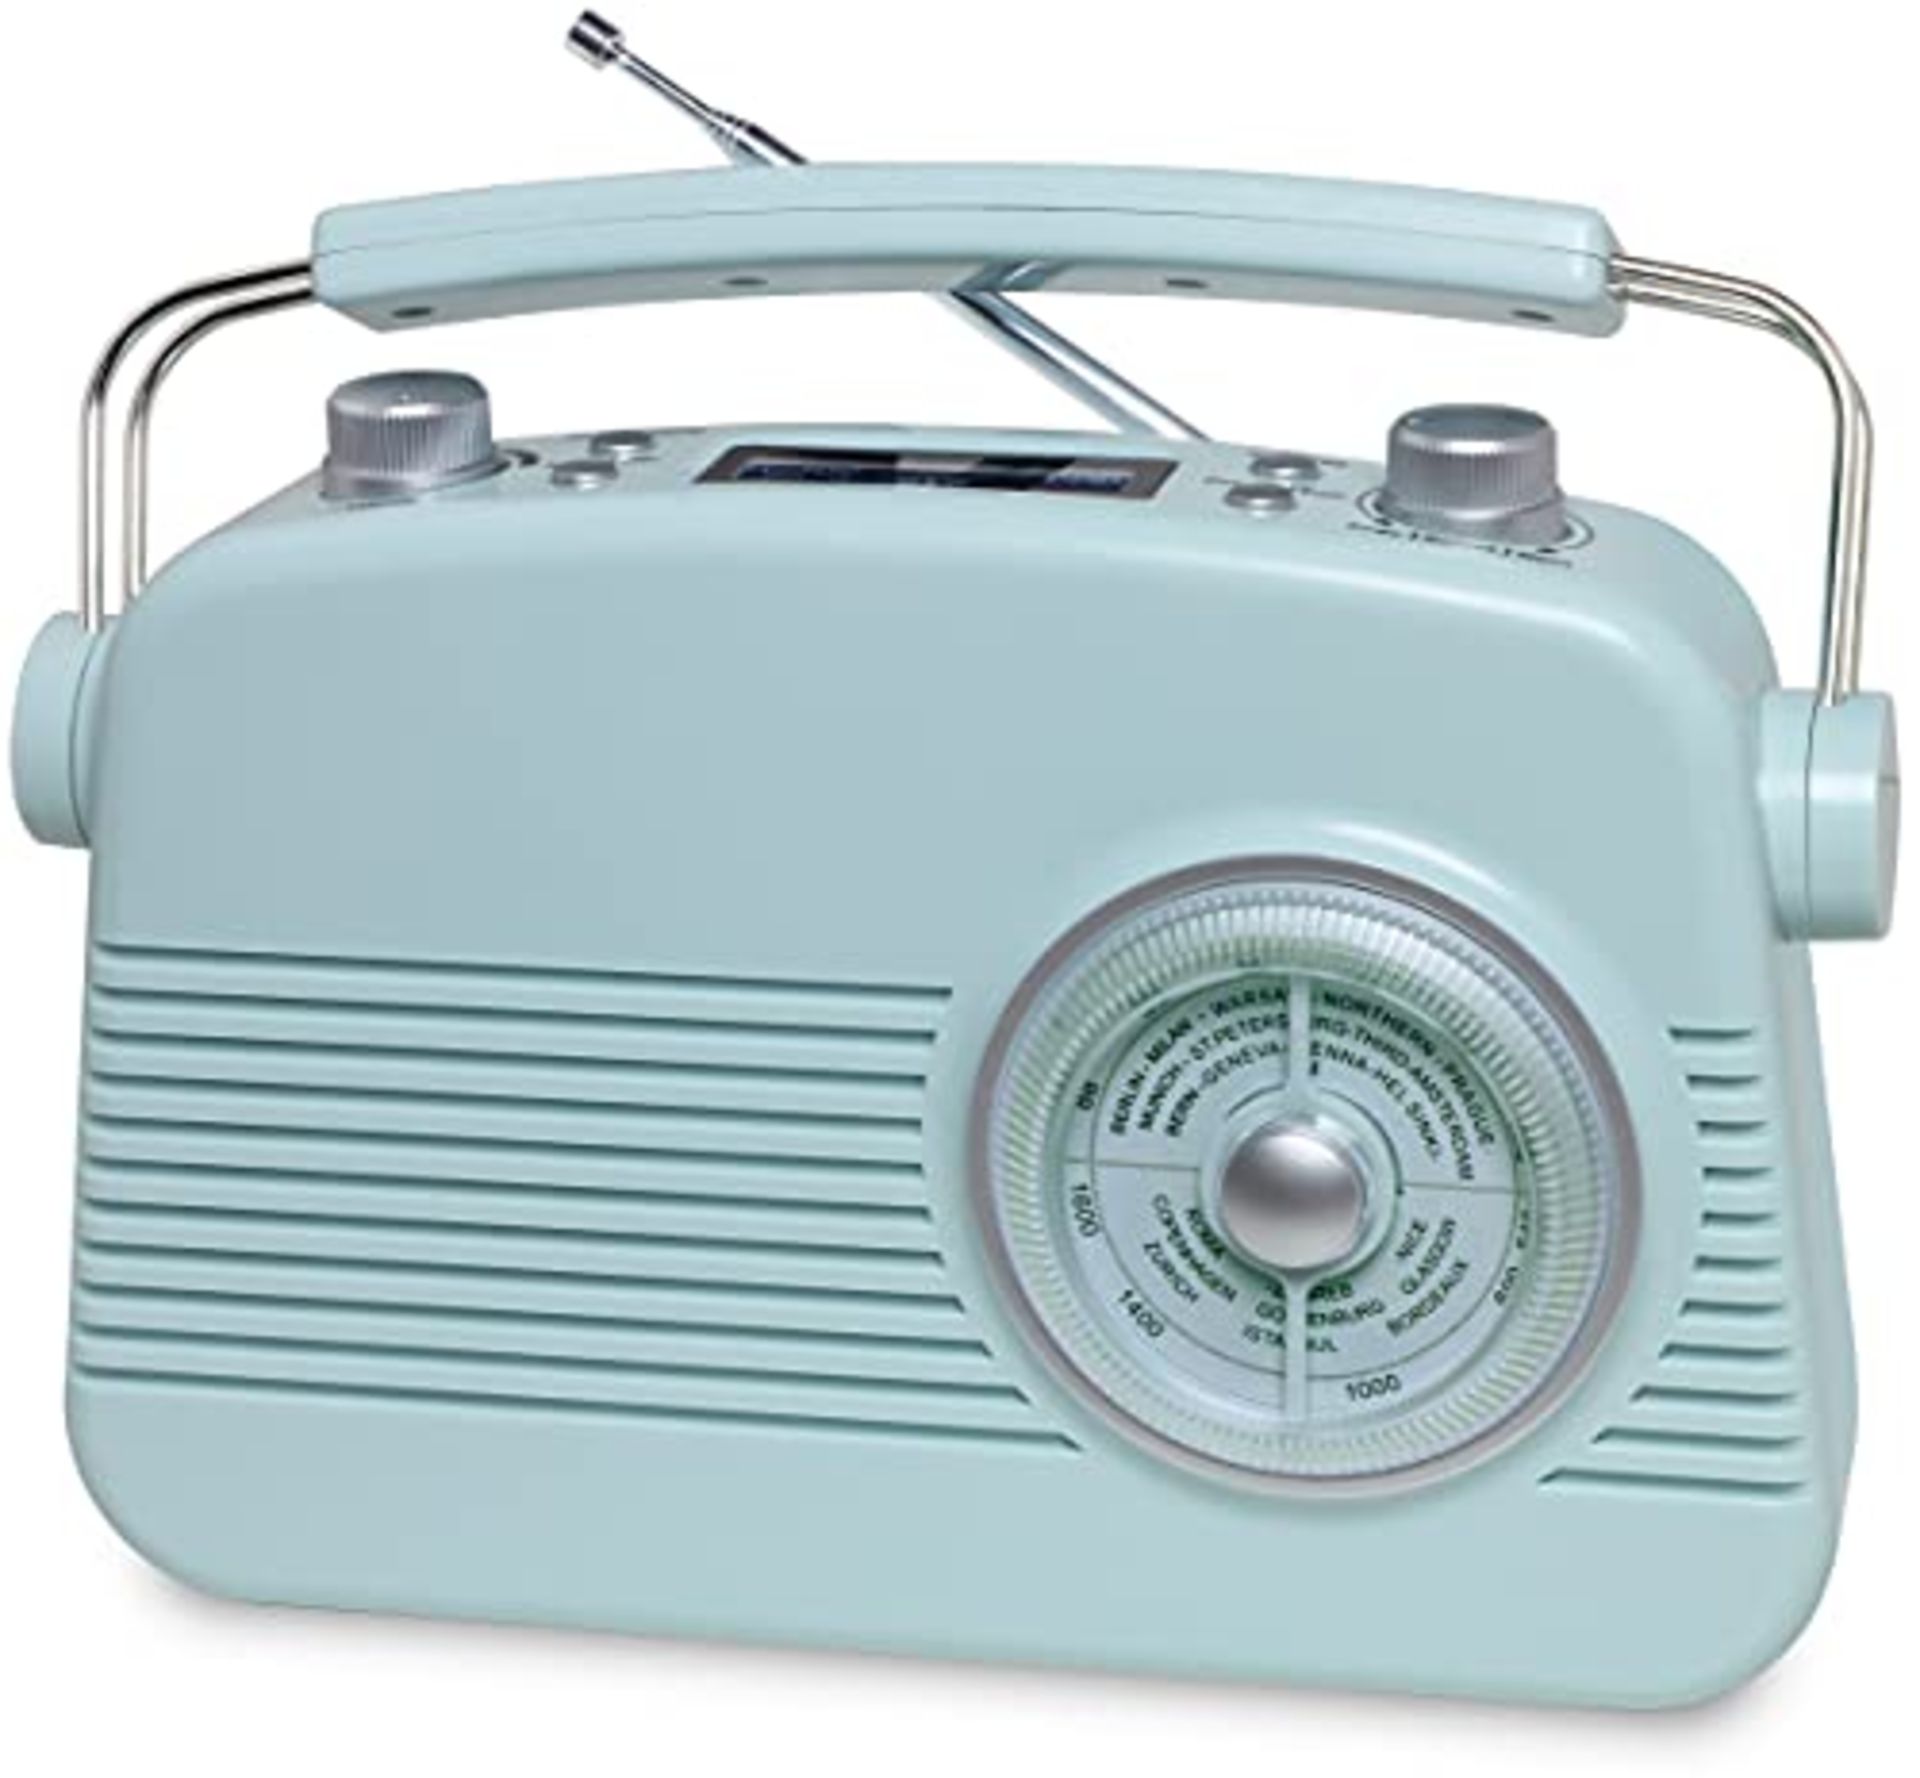 Blaupunkt TERRIS VINTAGE RADIO, portable nostalgic retro radio with state-of-the-art s